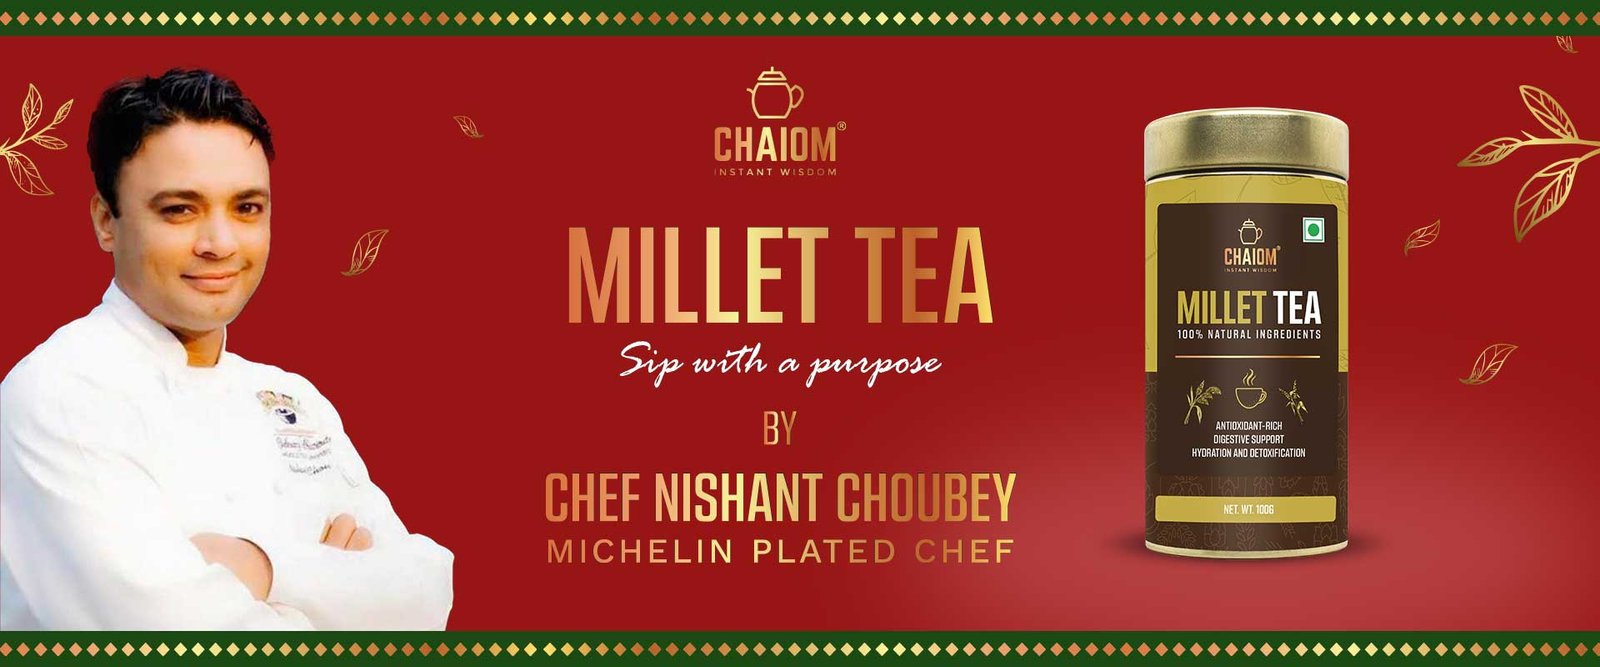 Chaiom Millet Tea by Michelin Plated Chef Nishant Choubey